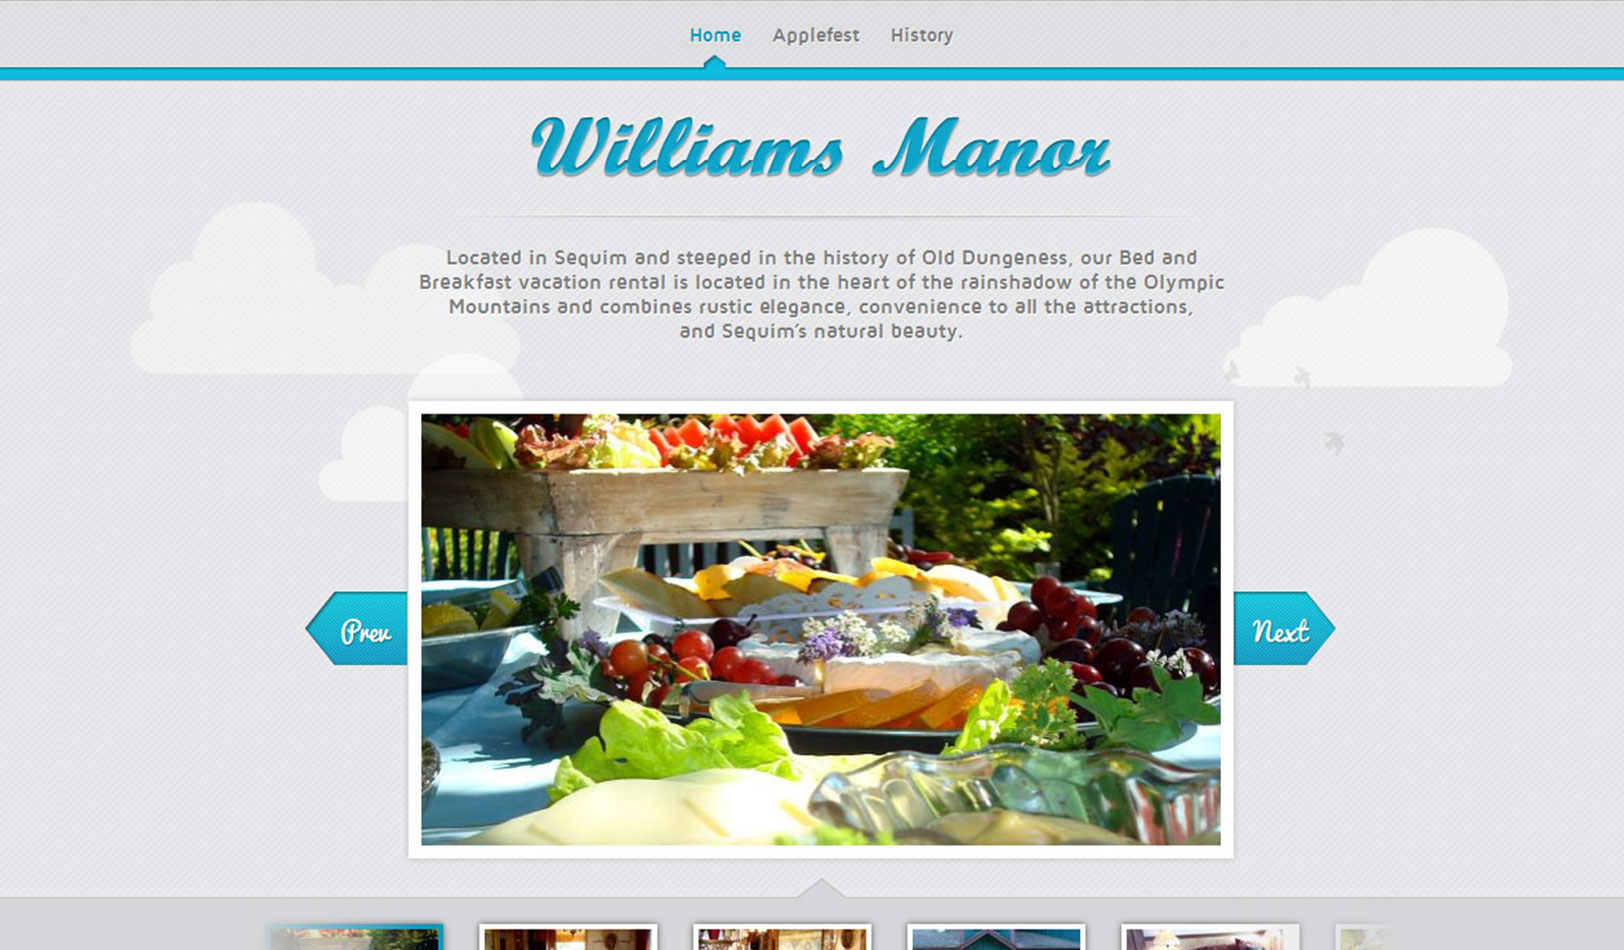 images/Portfolio-images/williams-manor.jpg#joomlaImage://local-images/Portfolio-images/williams-manor.jpg?width=1624&height=950